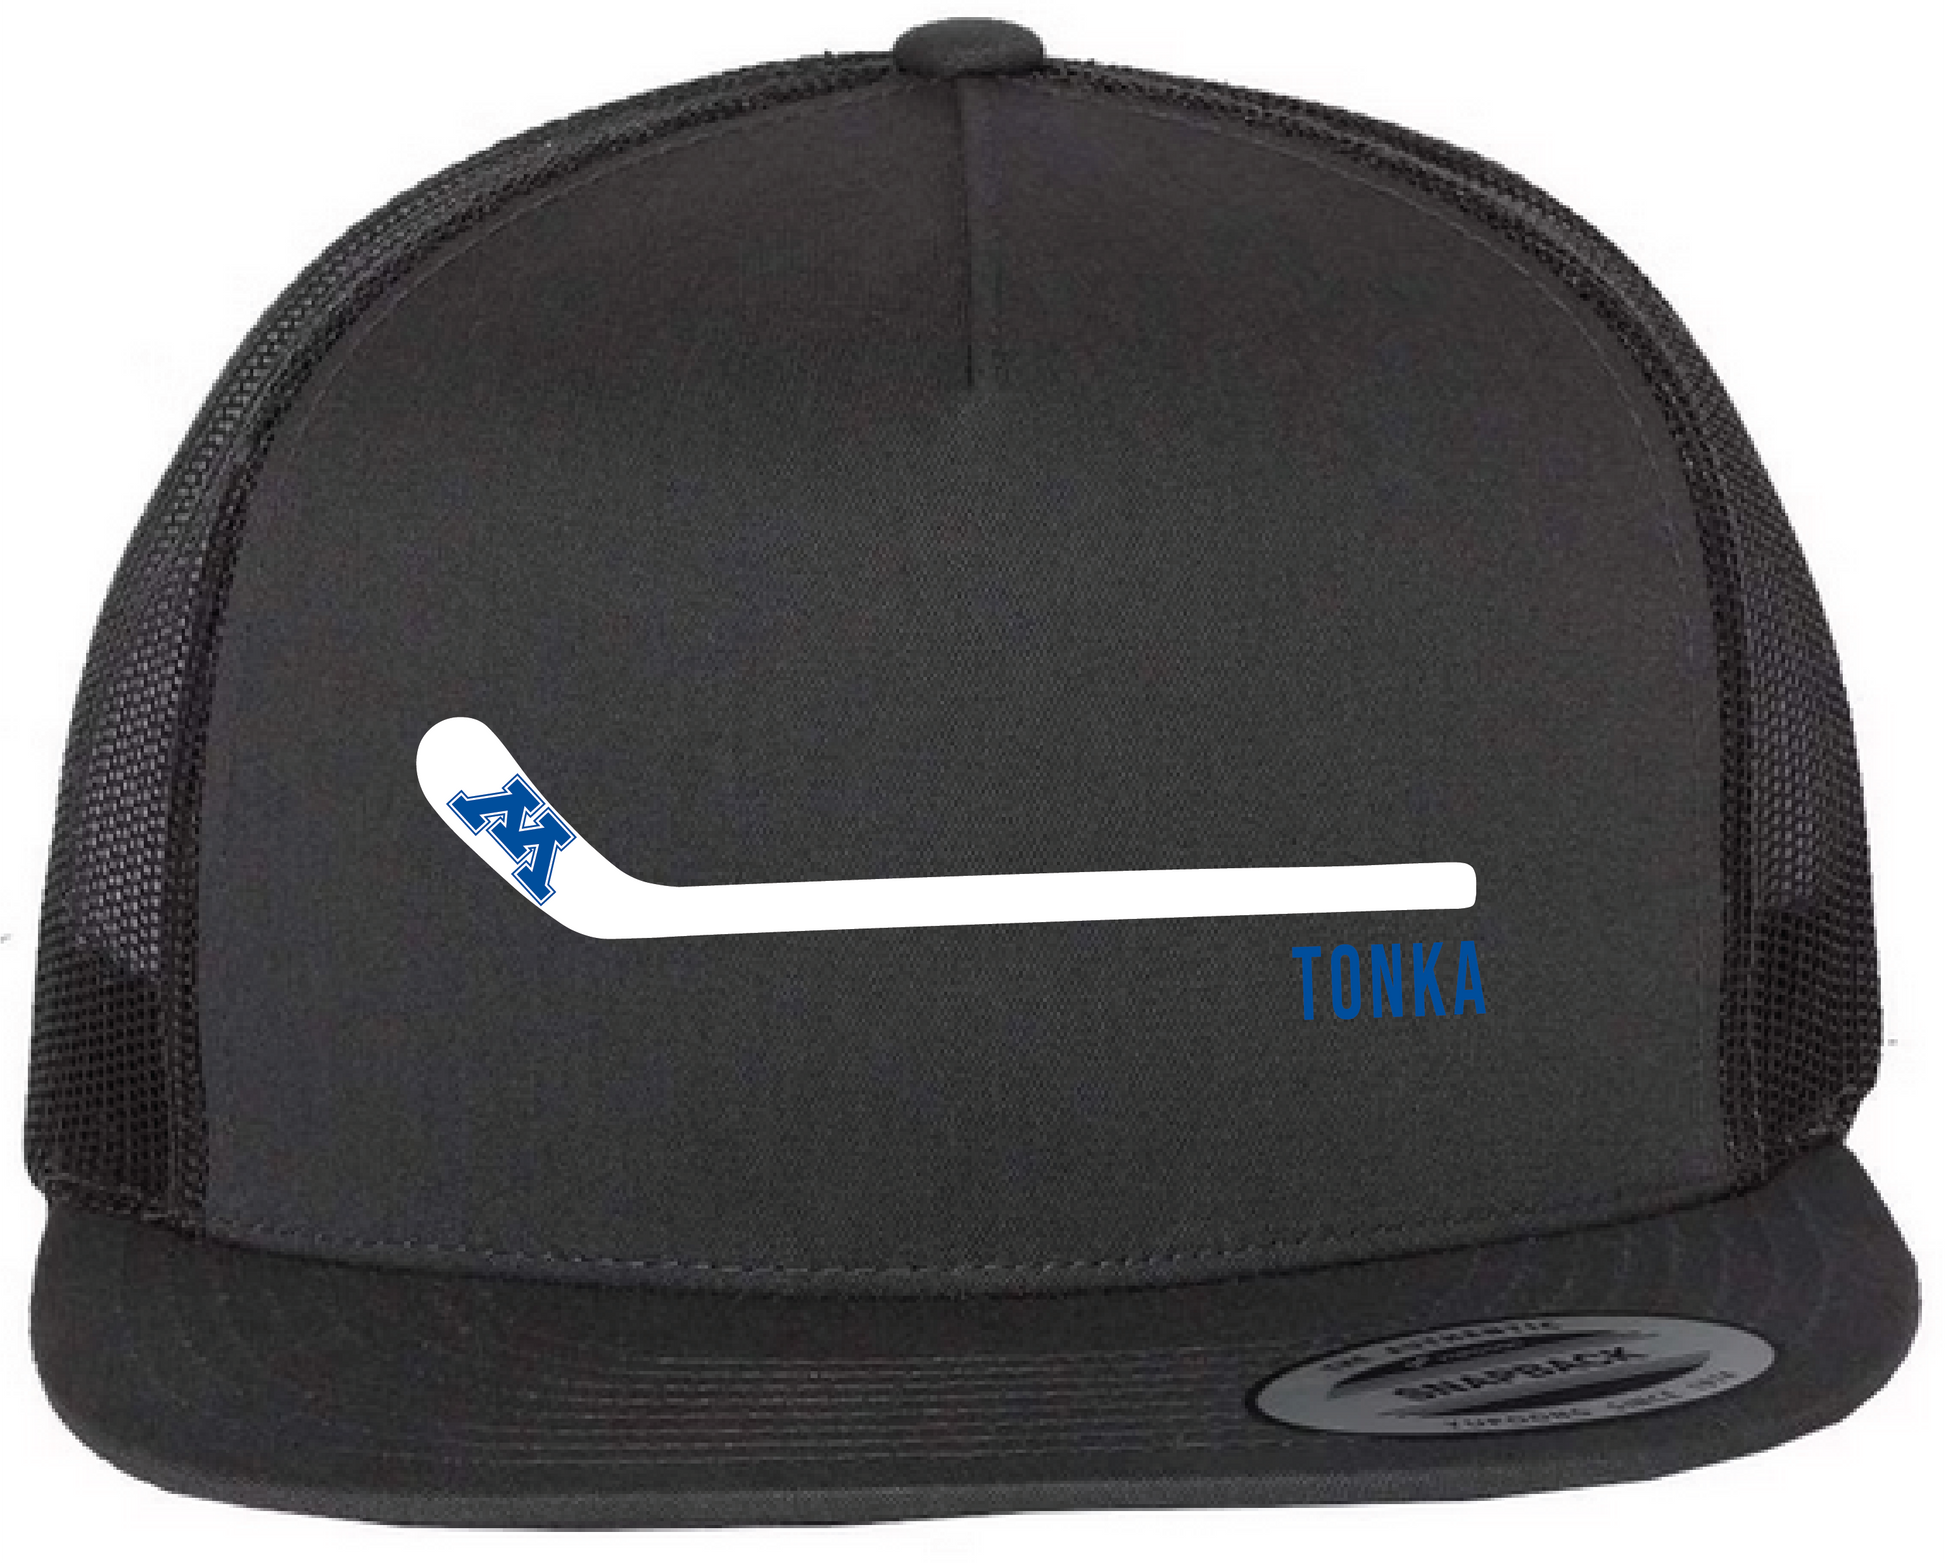 Tonka Hockey Stick Dark Graphite/Dark Graphite